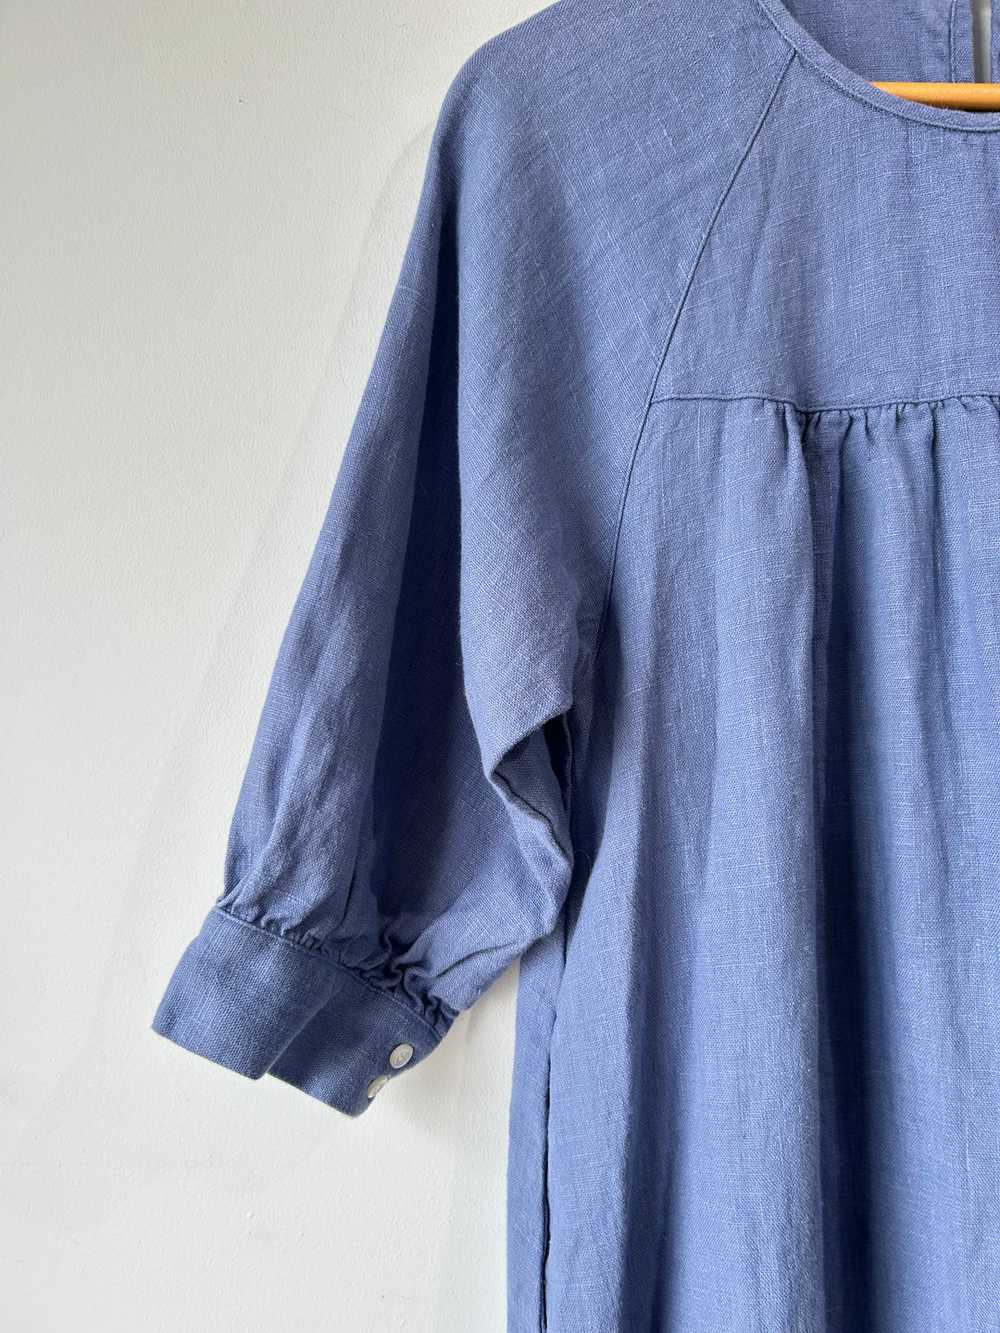 Beaton Cornflower Blue Linen Dress - image 4